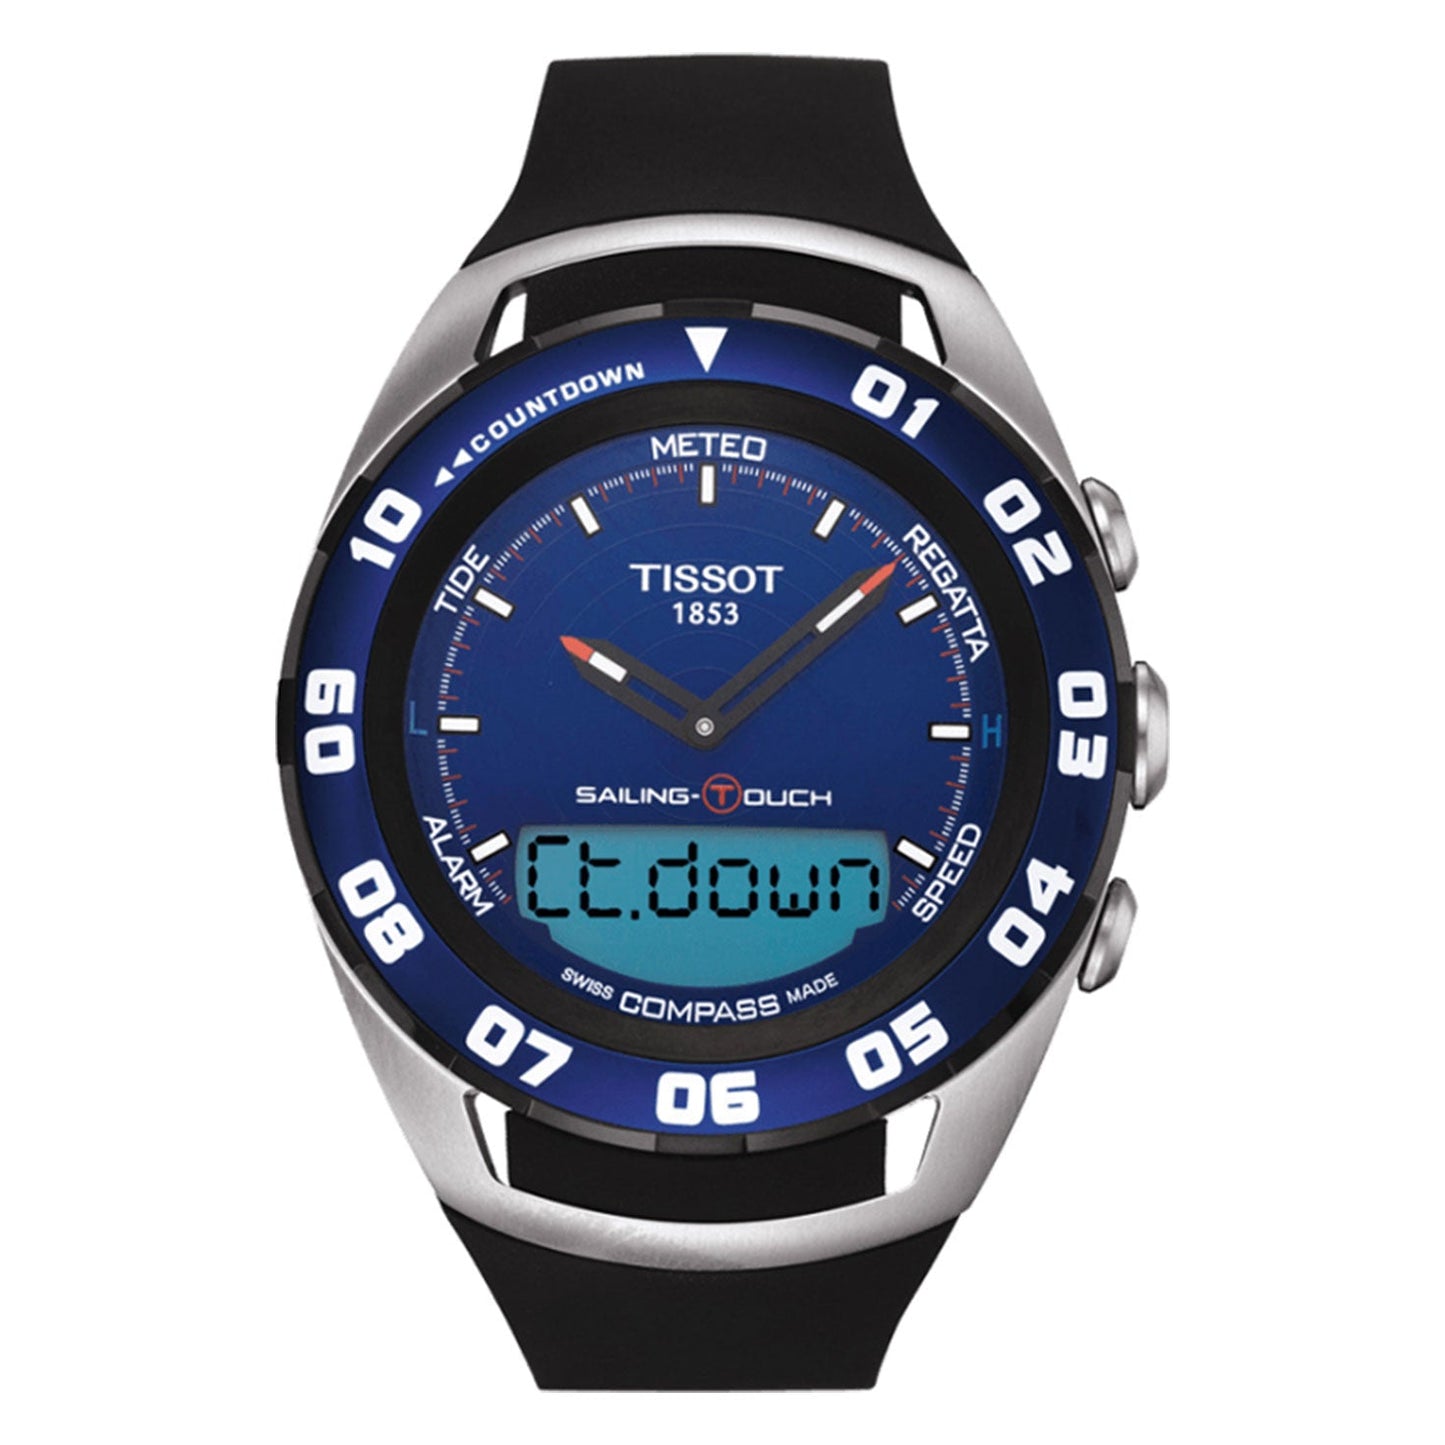 Tissot T-Touch Sailing Analog-Digital 45mm Watch